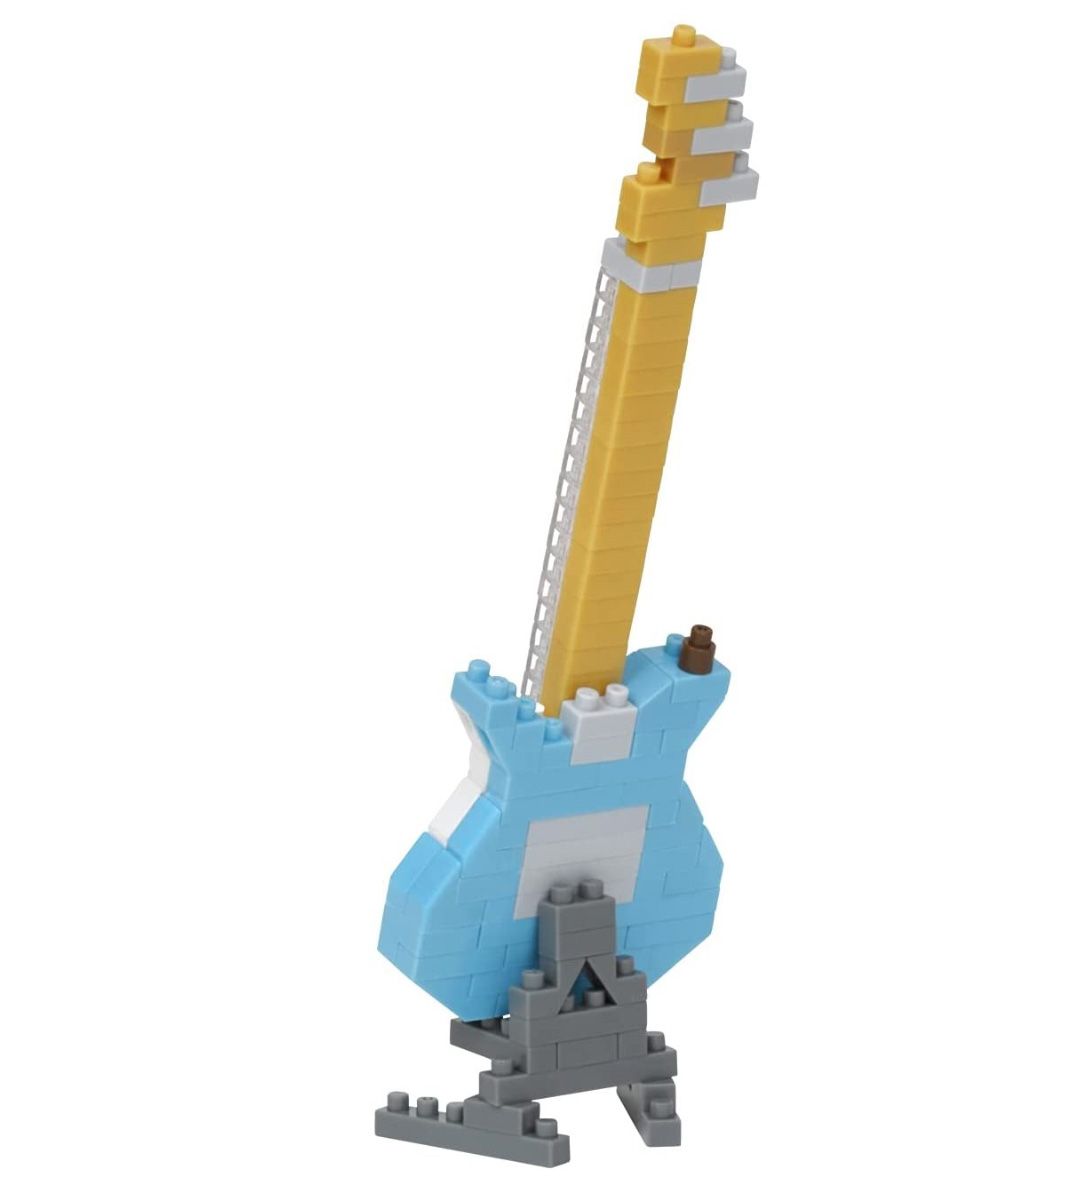 Nanoblock - Electric Guitar Pastel blue - NBC 346